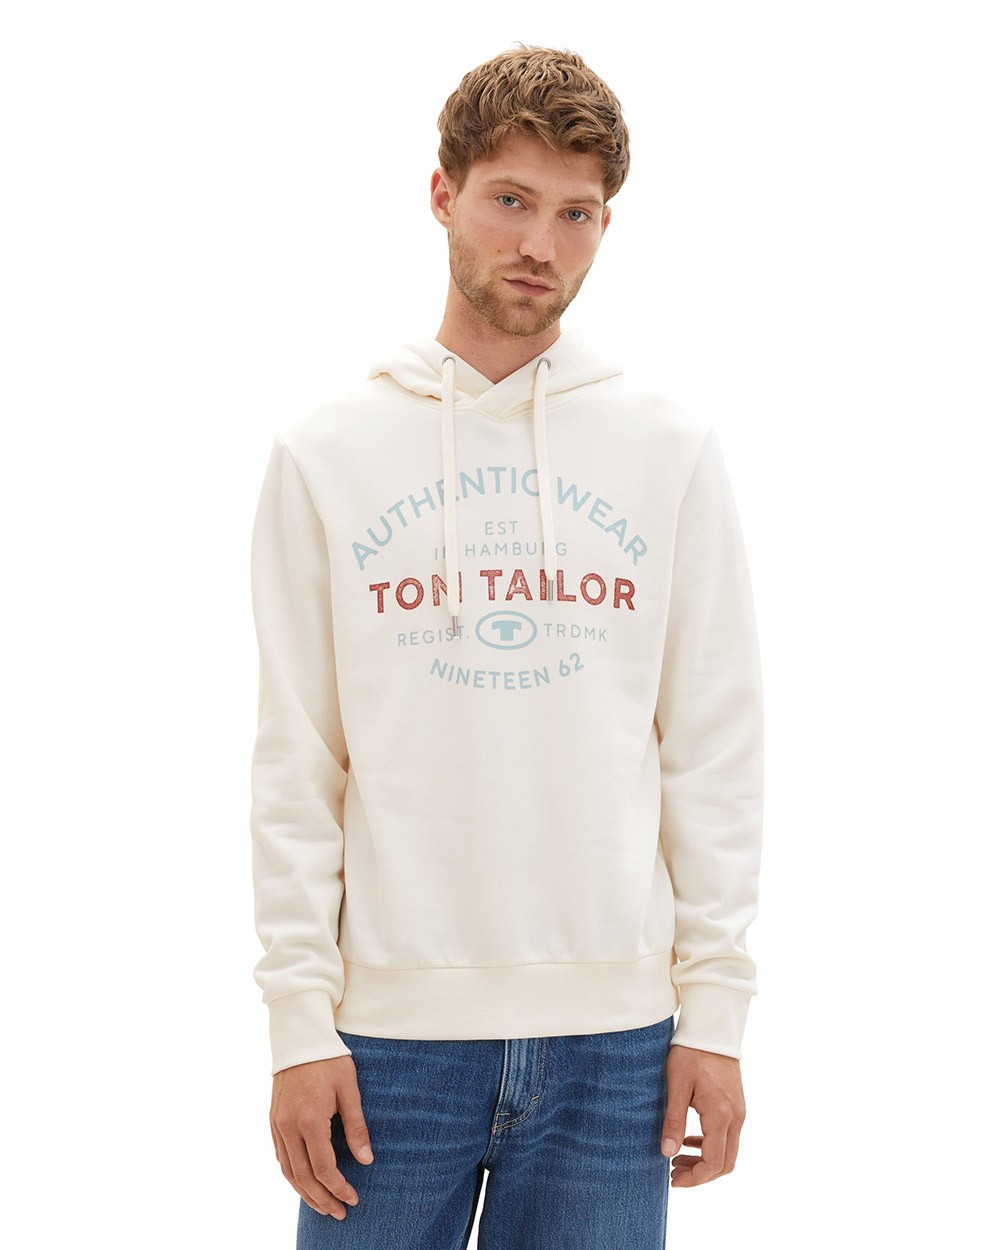 TOM TAILOR 1038744 - Sweatshirt